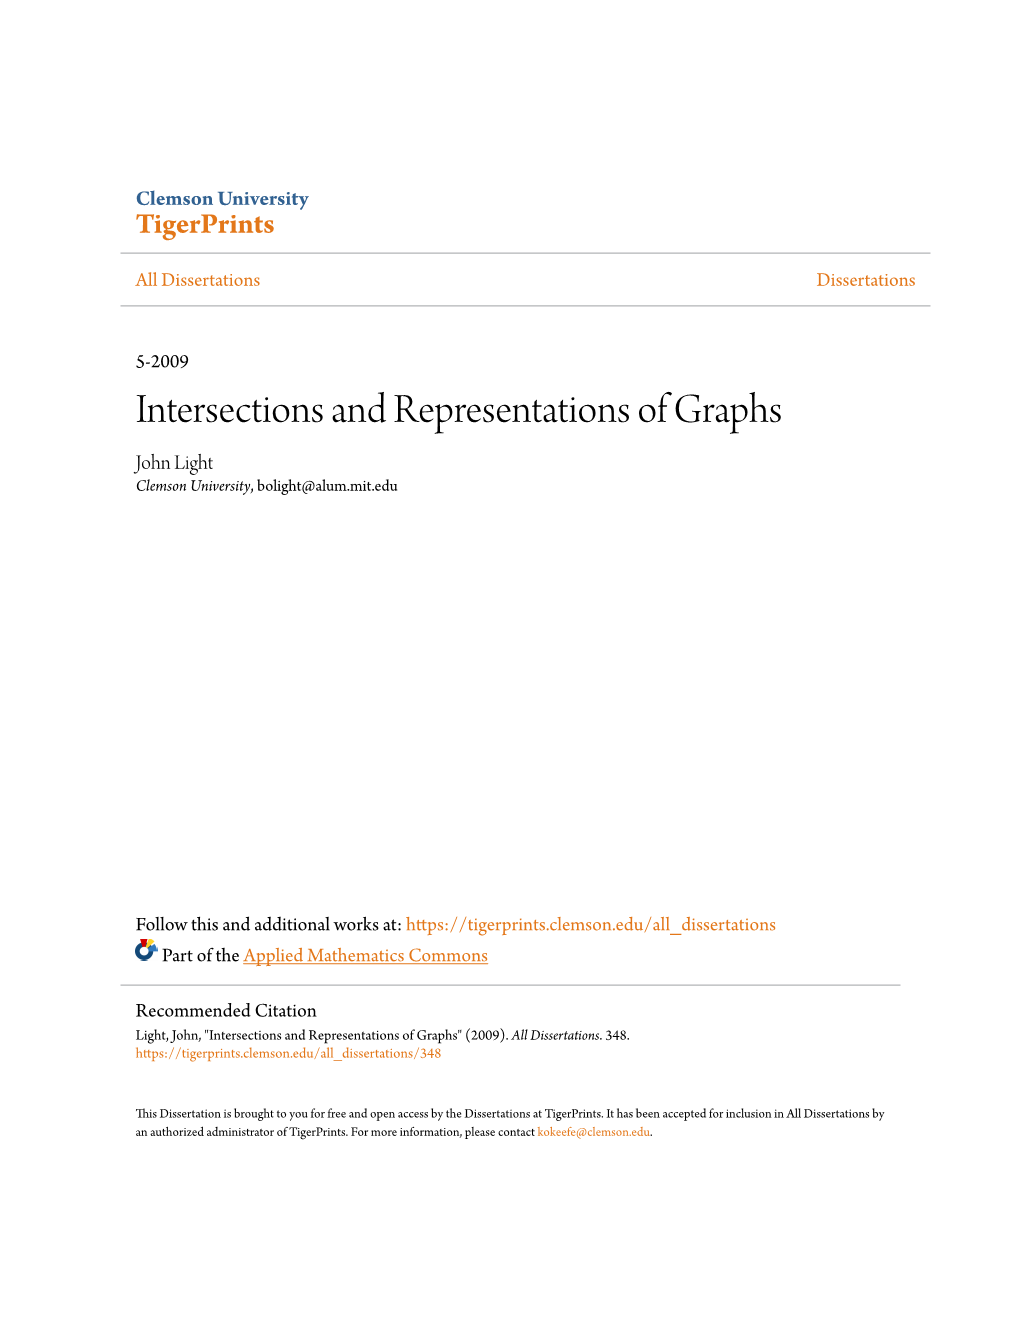 Intersections and Representations of Graphs John Light Clemson University, Bolight@Alum.Mit.Edu